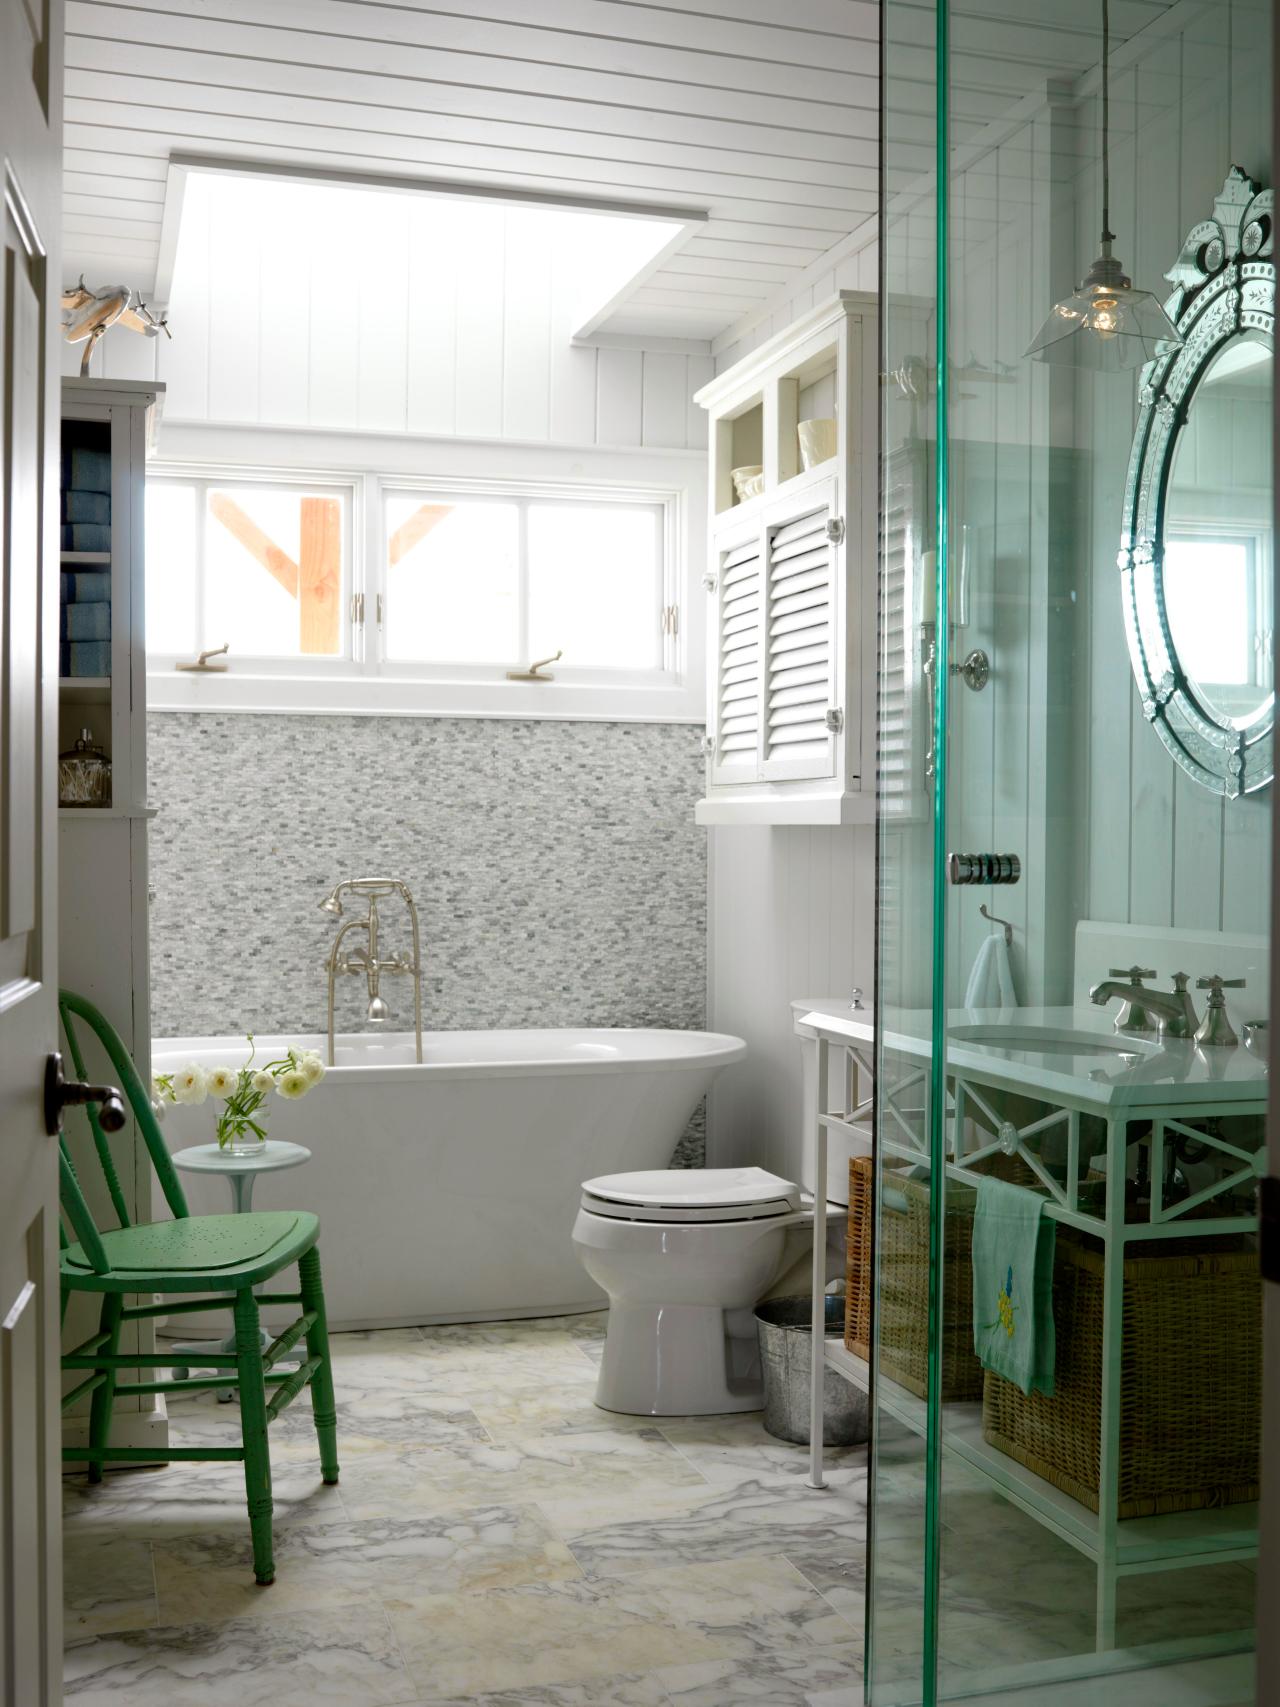 10 Yellow Bathroom Ideas HGTV s Decorating & Design Blog